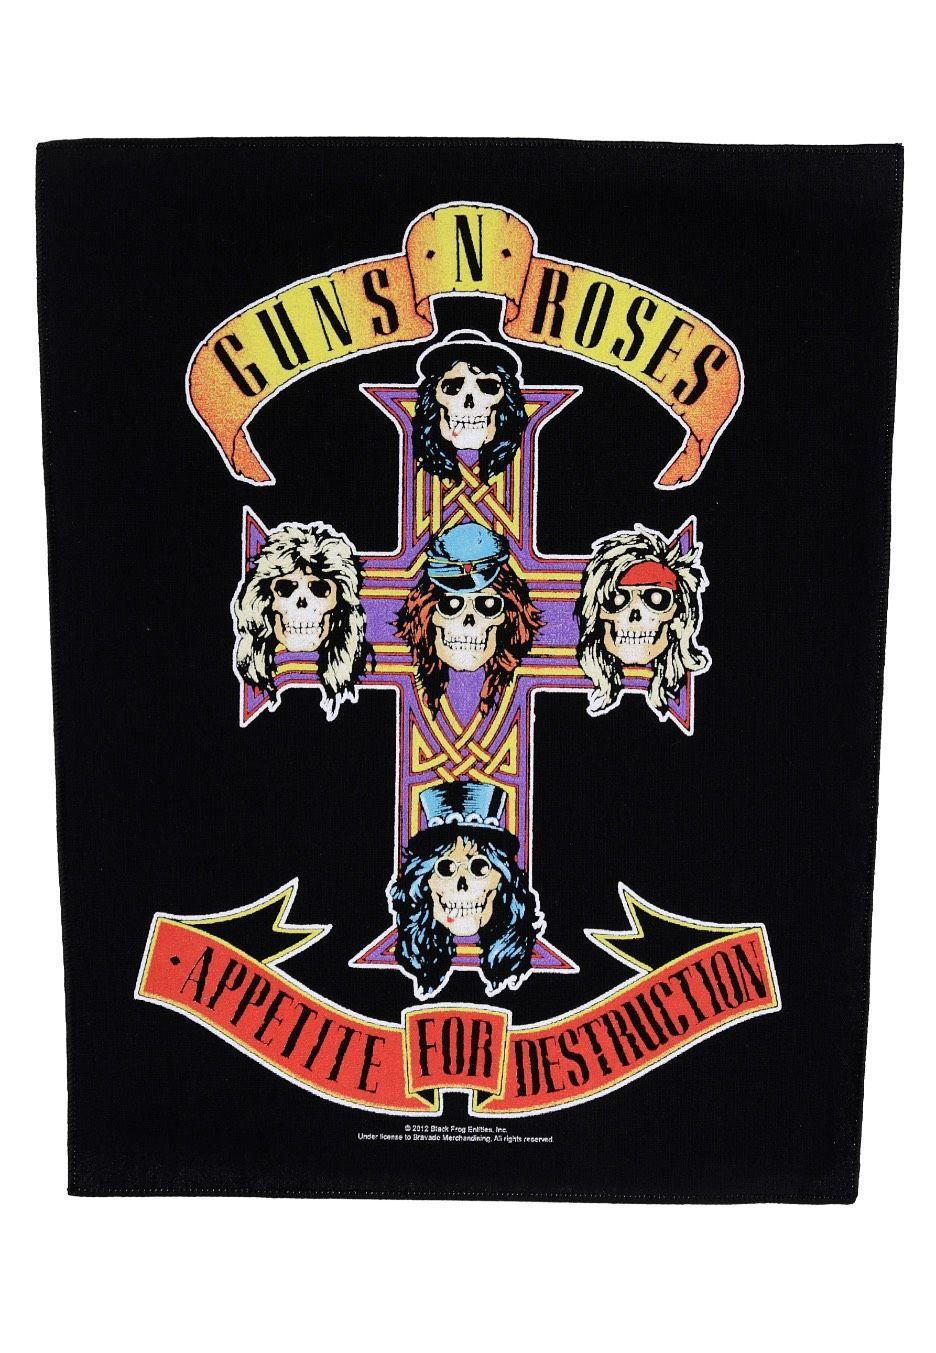 Guns and Roses Appetite for Destruction Logo - Guns N' Roses - Appetite For Destruction - Backpatch - Official Hard ...